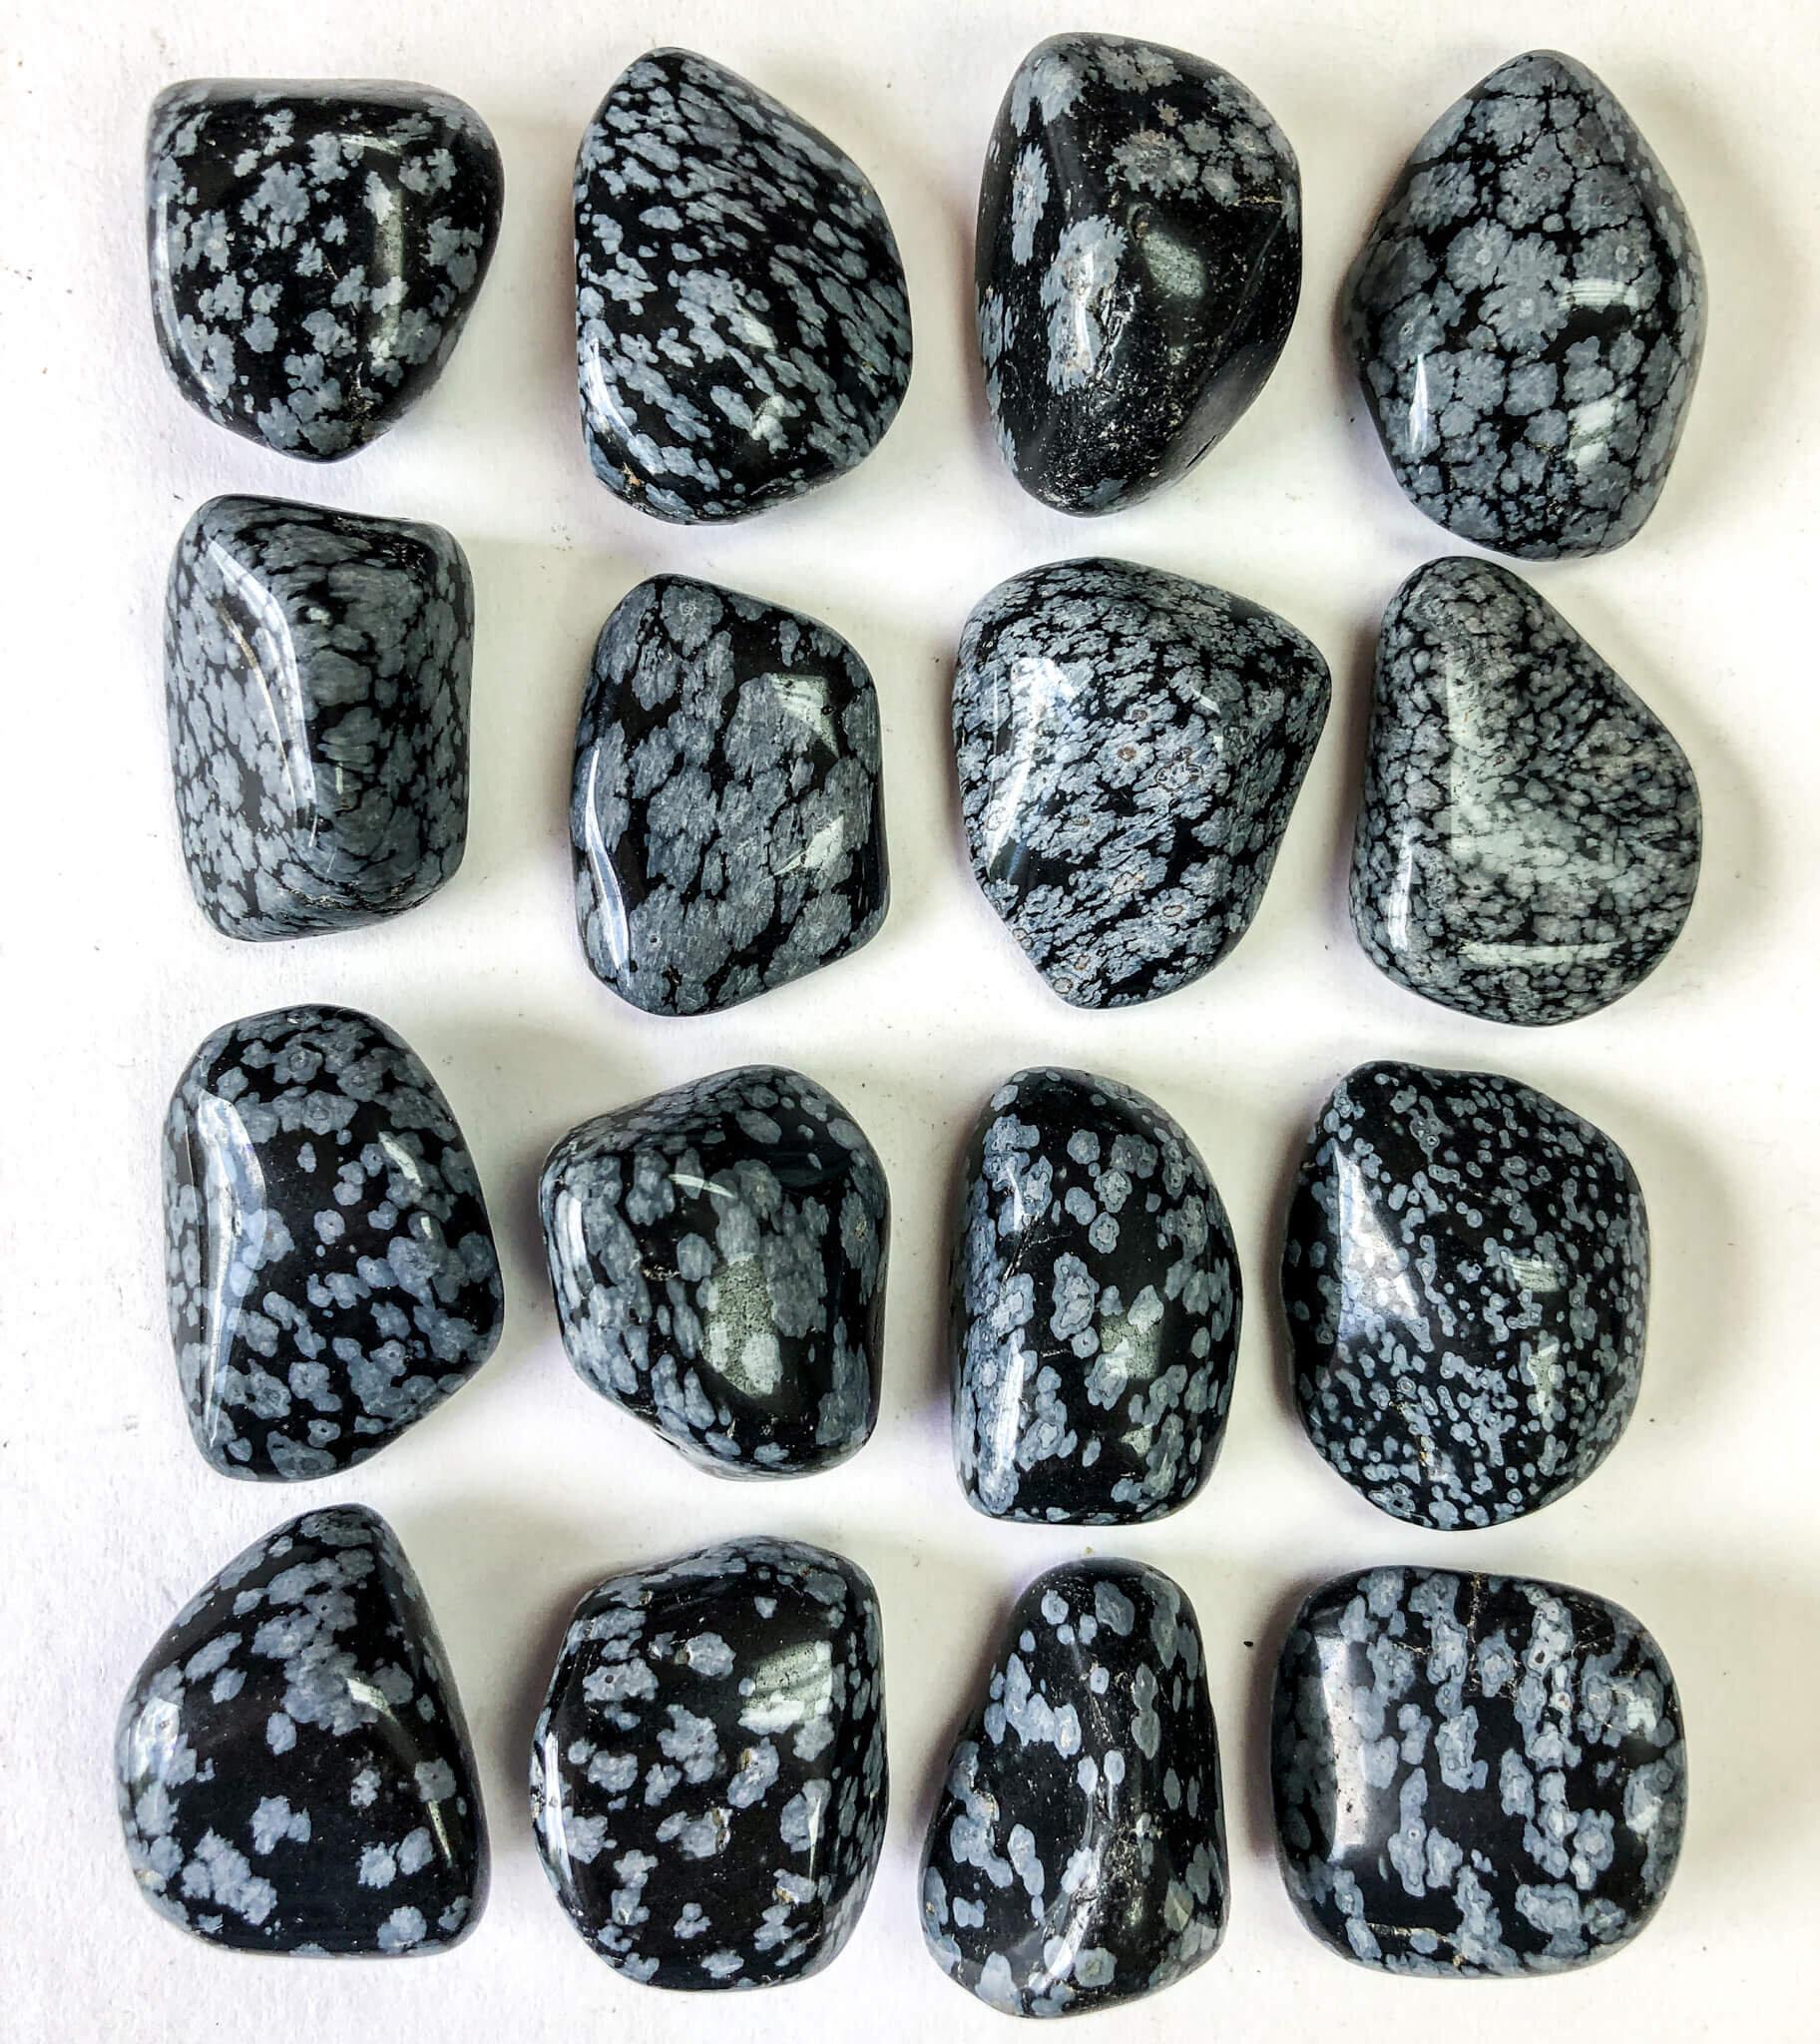 Snowflake Obsidian Tumbled Pocket Stone Rocks With Sass